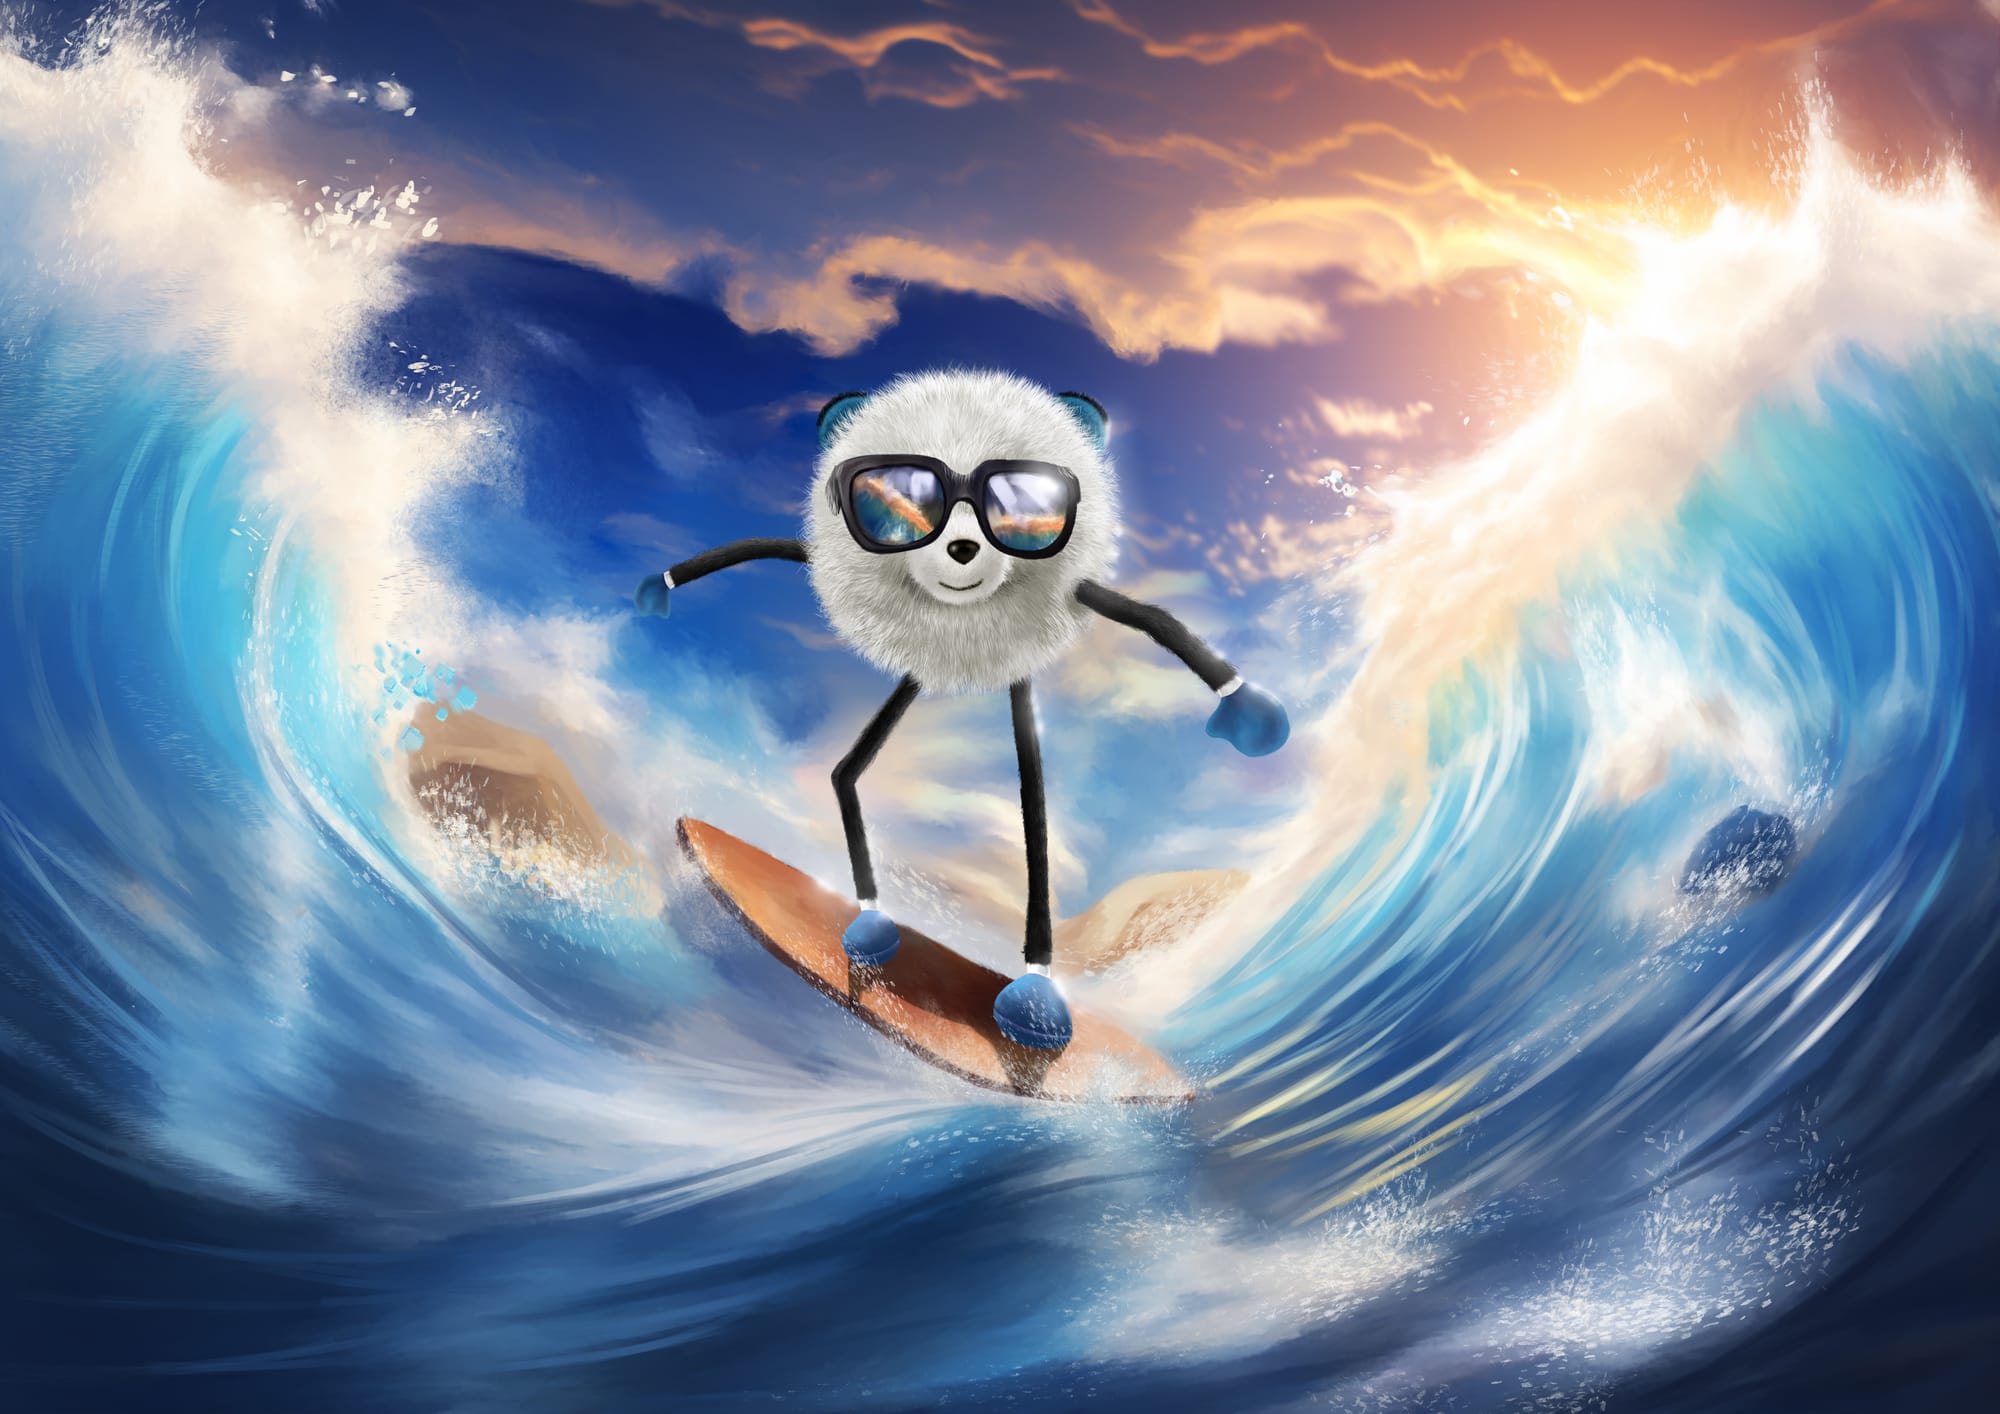 Fibby Wuzzly - Surfs Up!